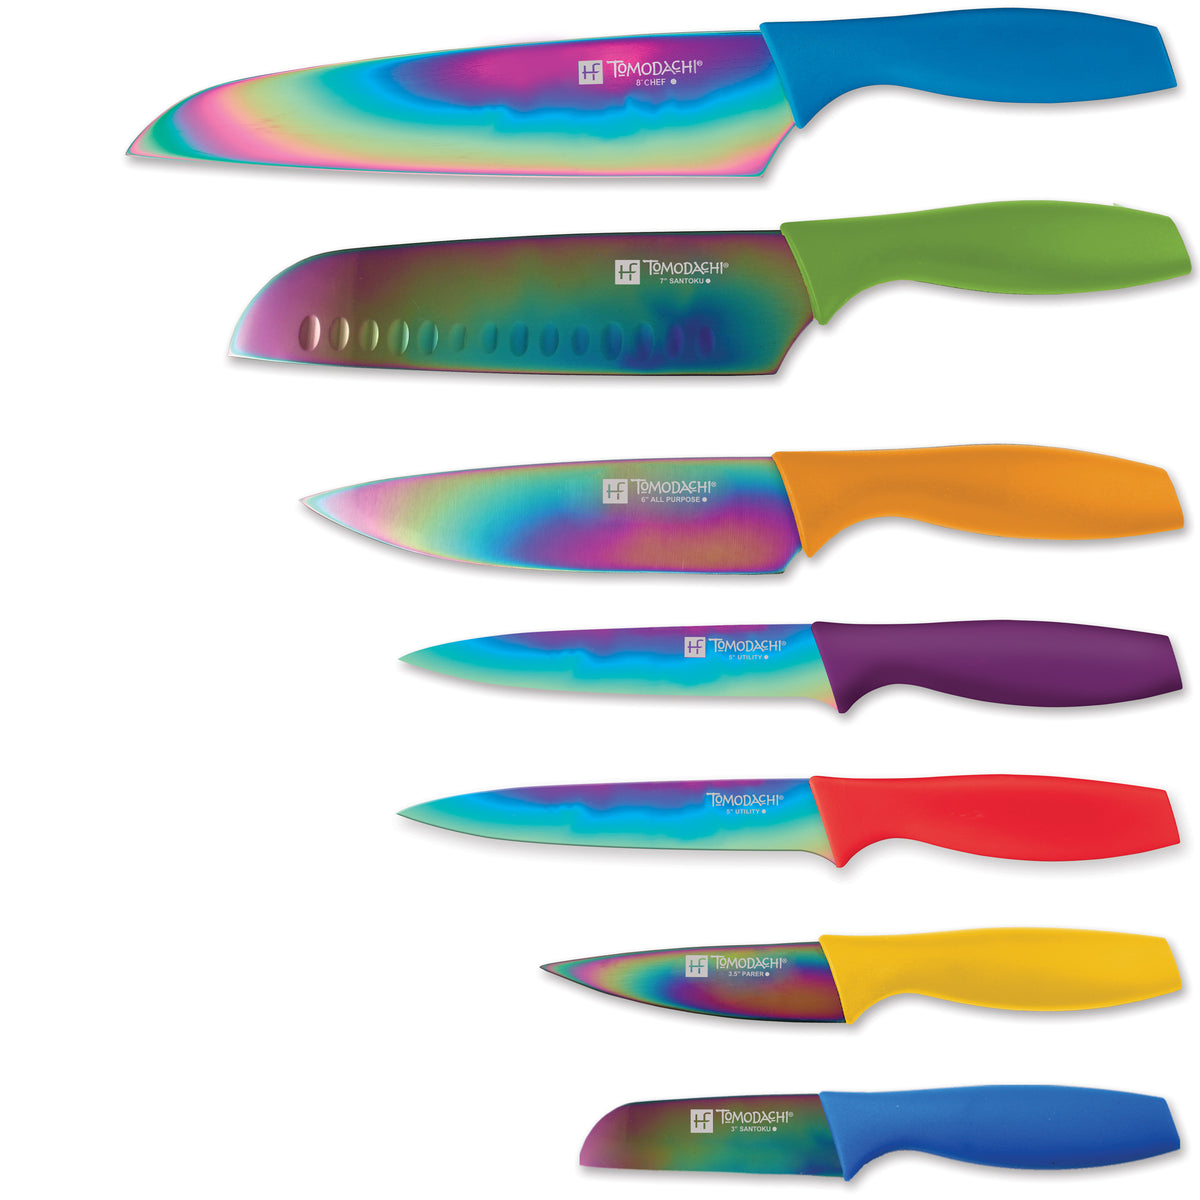 New Tomodachi Hampton Forge Knife Set